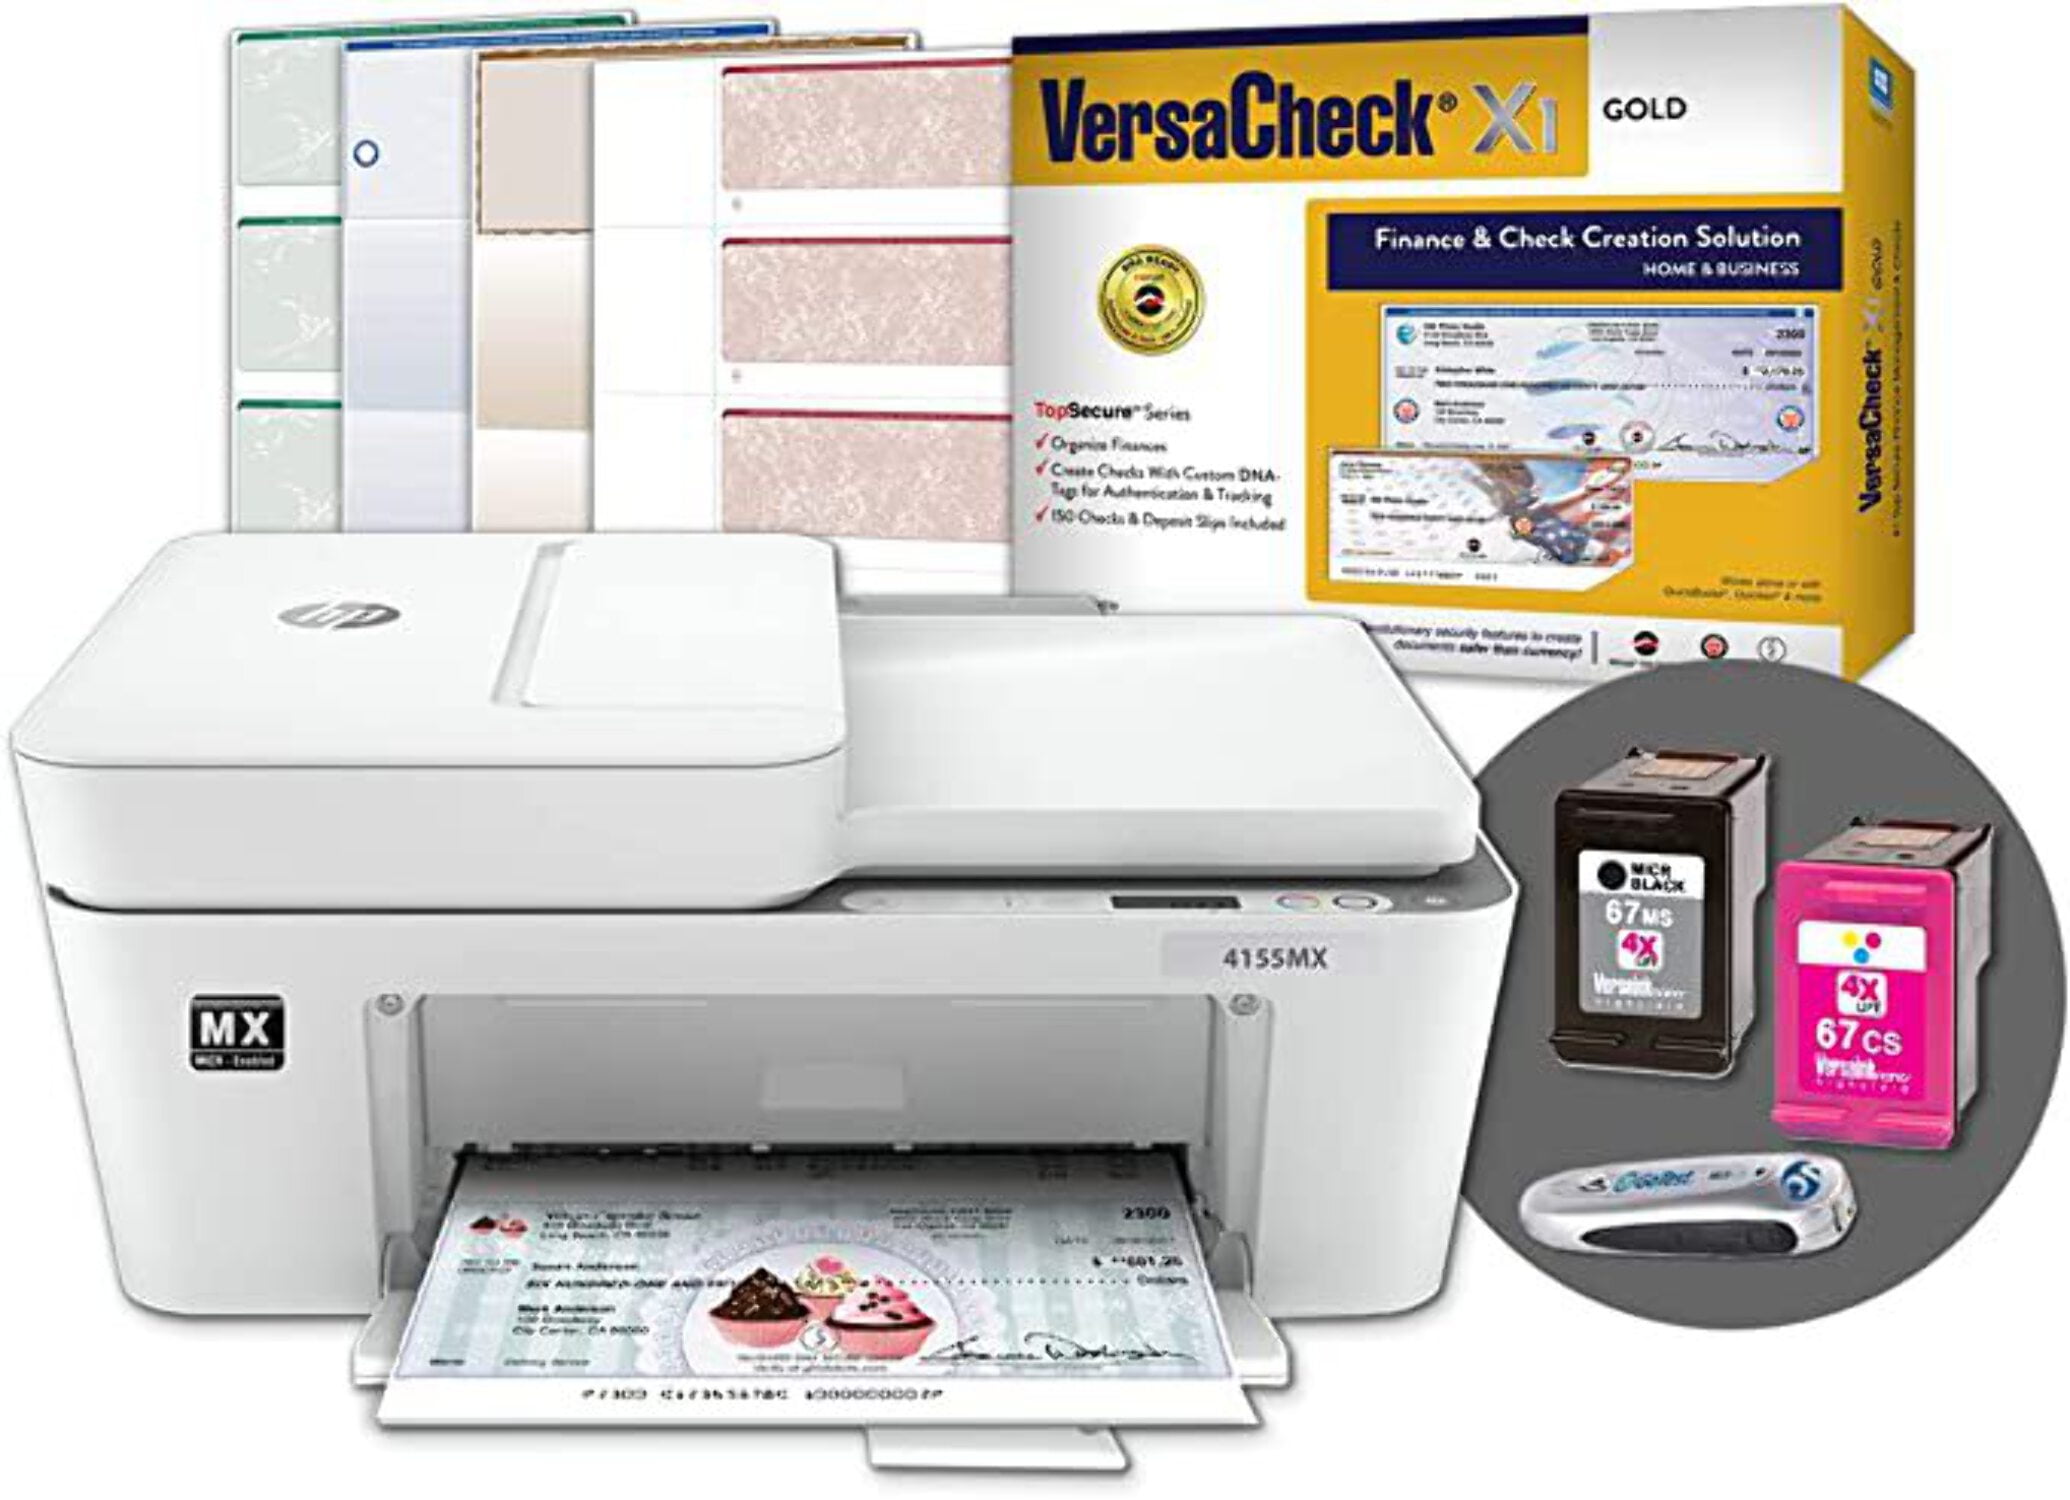 VersaCheck HP DeskJet 4155 MXE MICR Check Printer X1 Check Printing Software (4155 MX) - Walmart.com